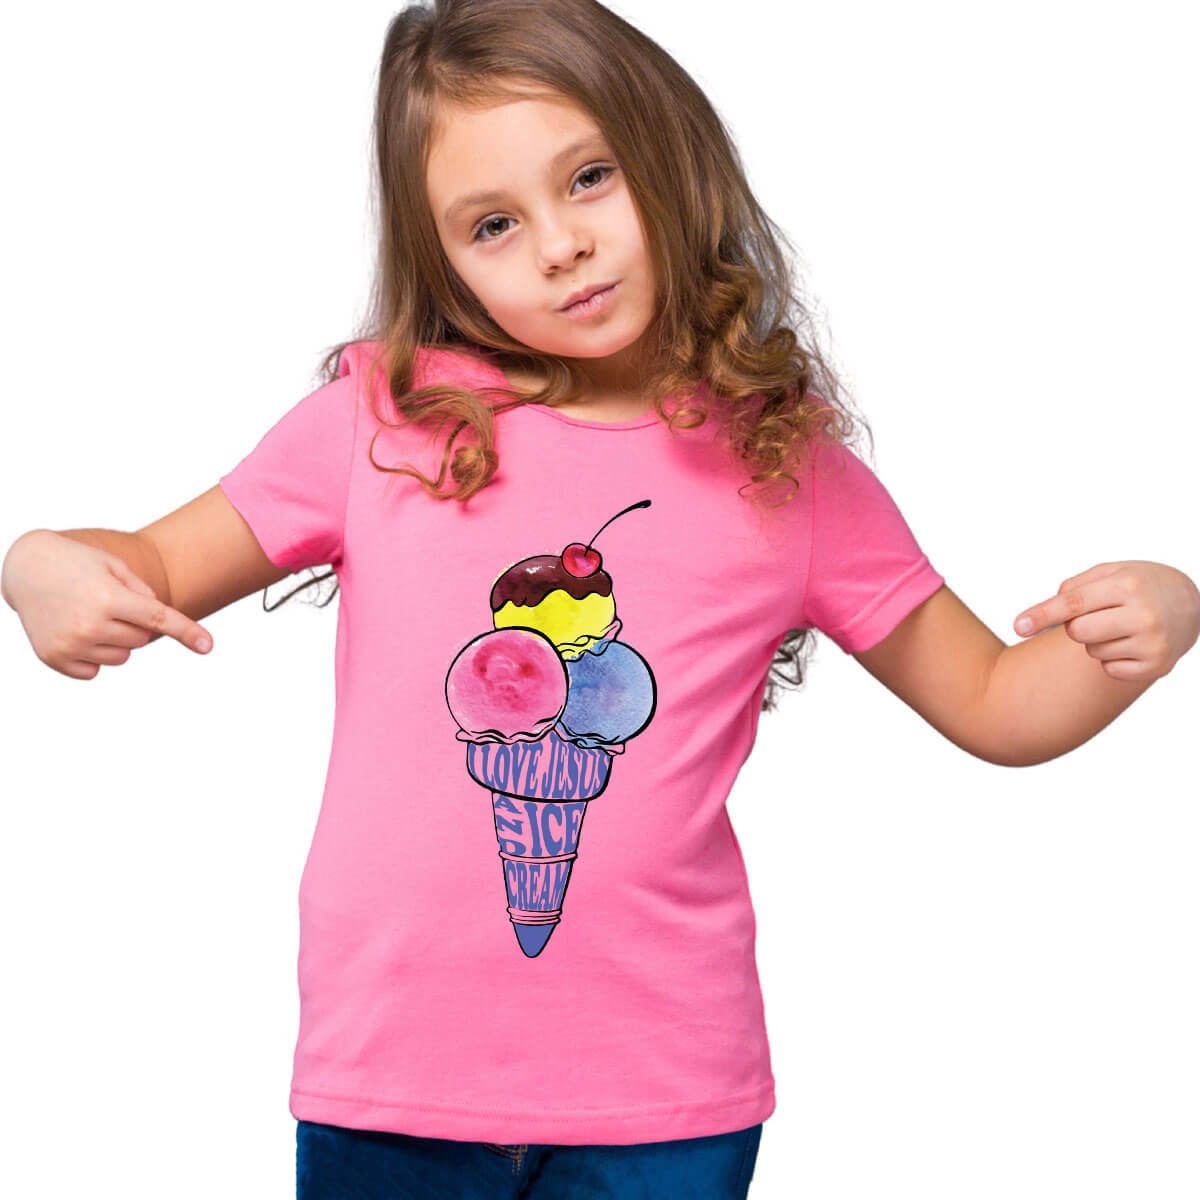 I Love Jesus And Ice Cream Toddler T Shirt